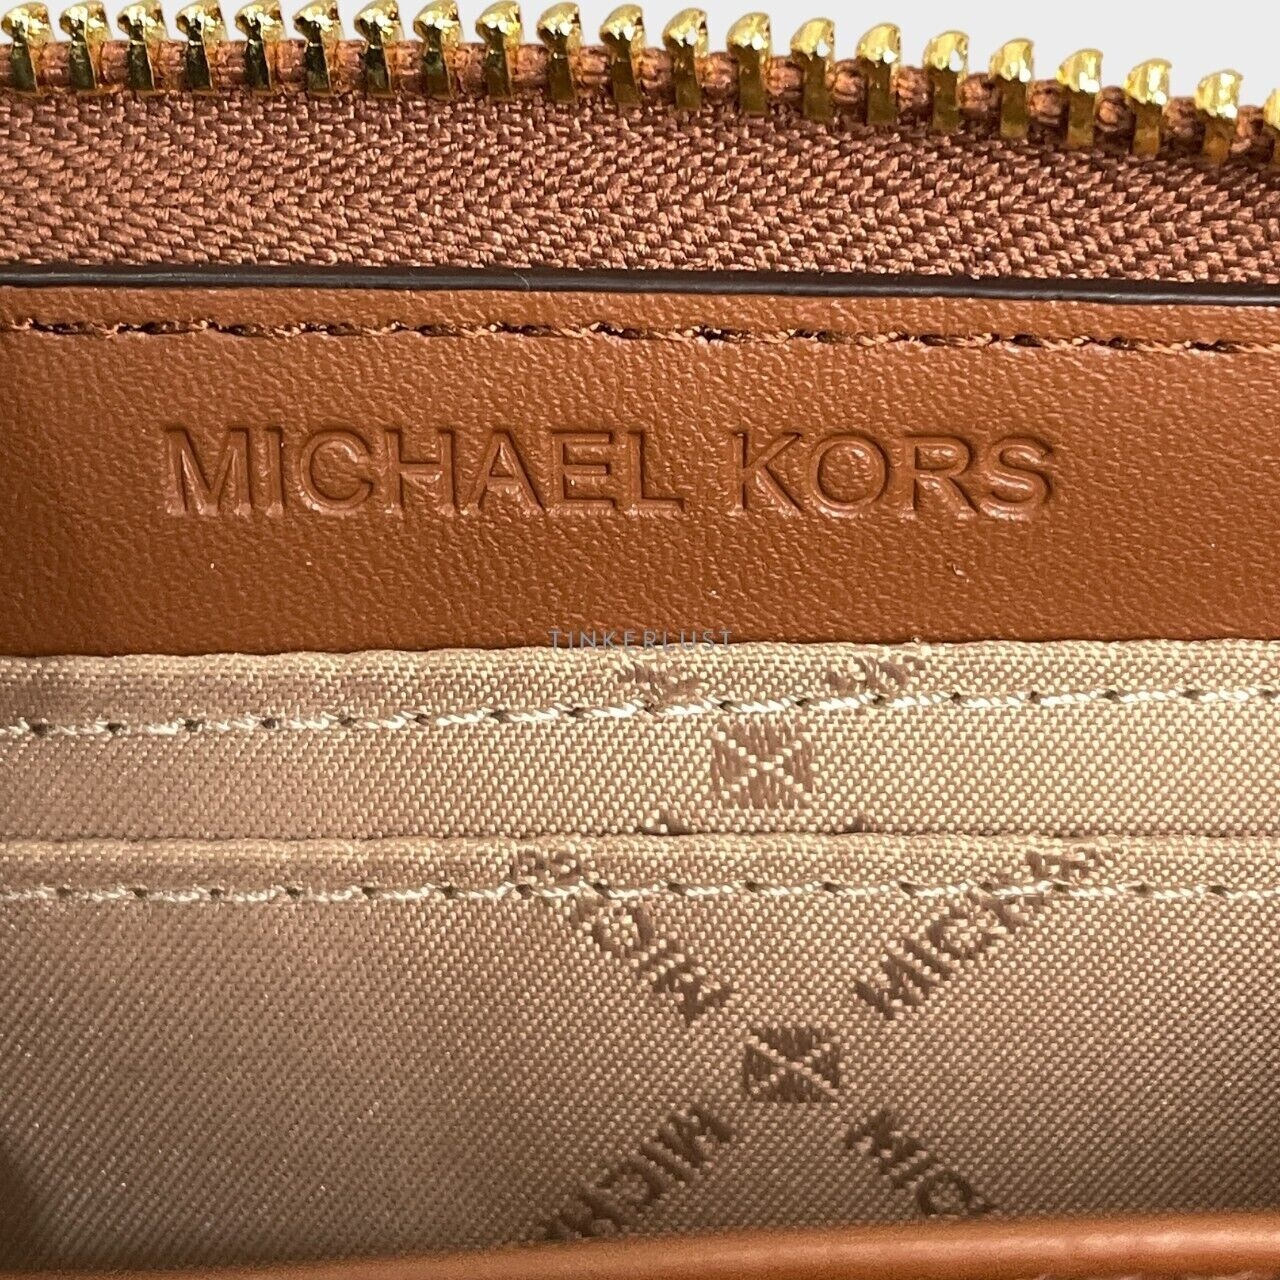 Michael Kors Jet Set Travel Vanilla Signature Card Case Wallet